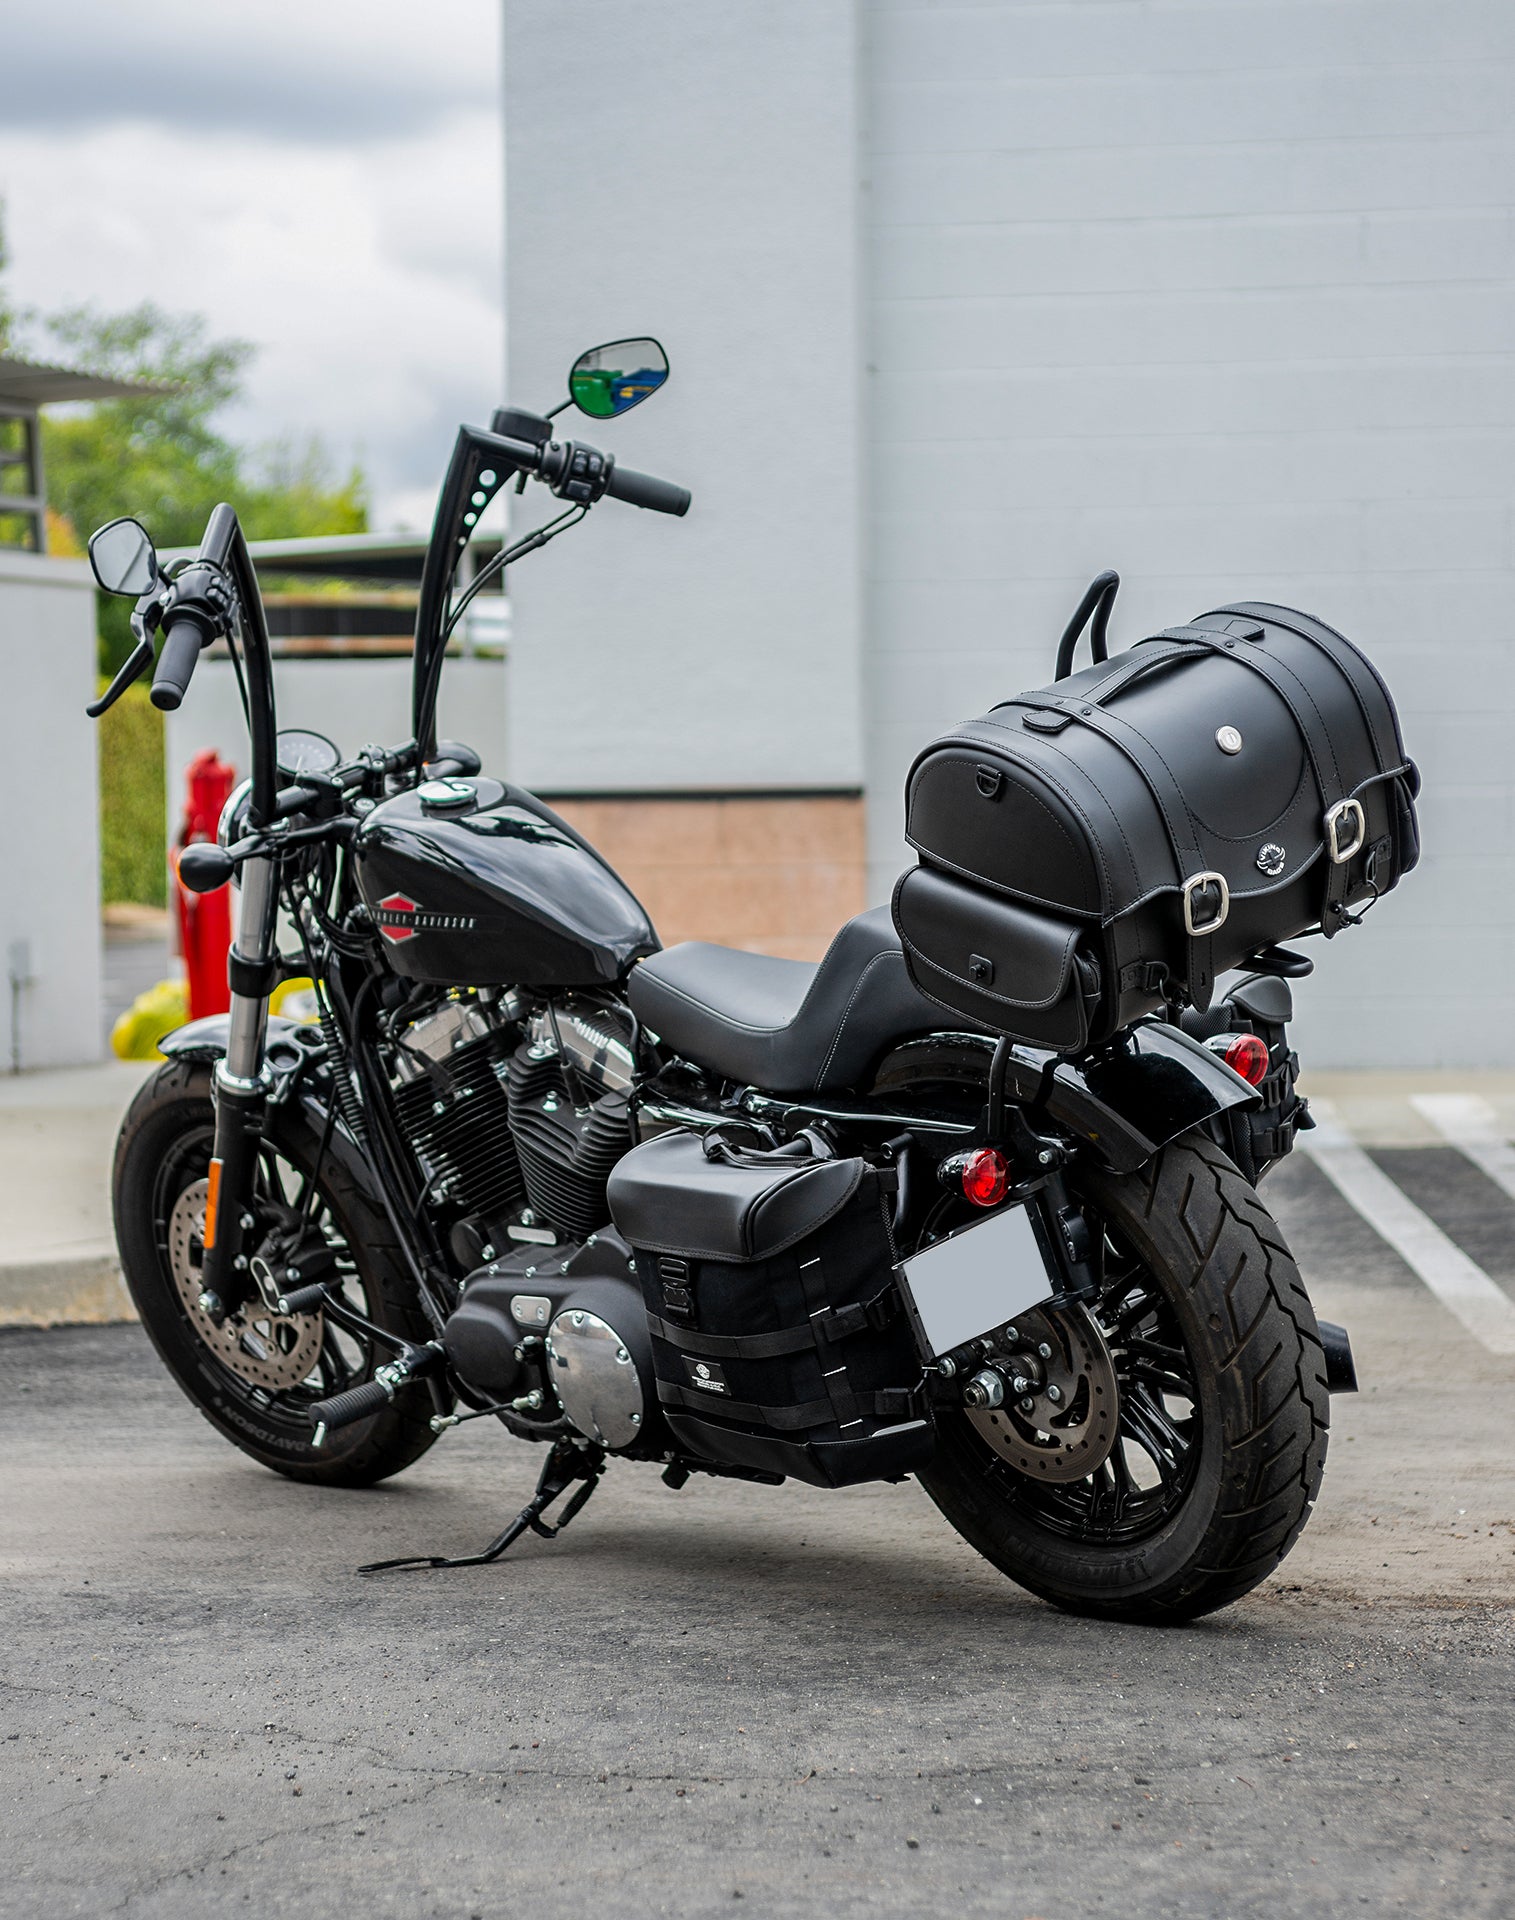 18L - Century Medium Honda Leather Motorcycle Roll Bag